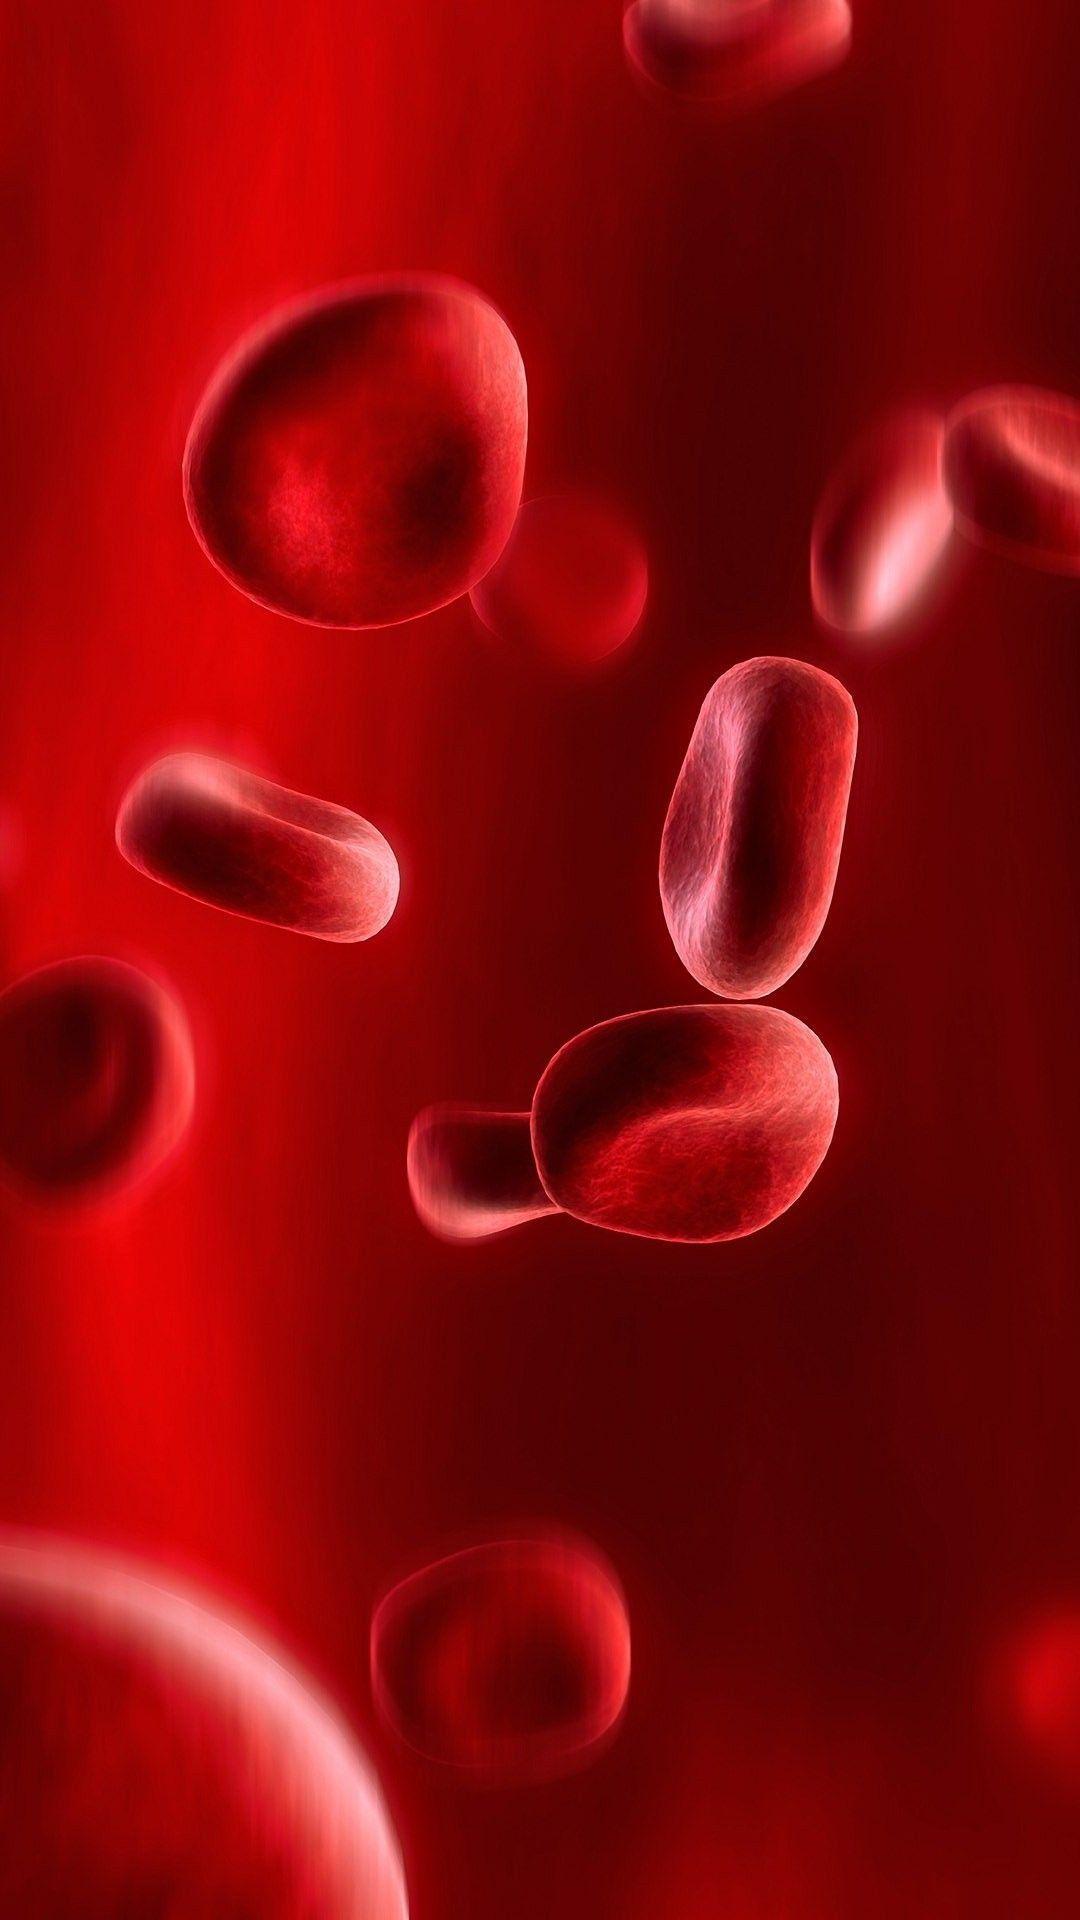 Blood cells Mobile Wallpaper 4532